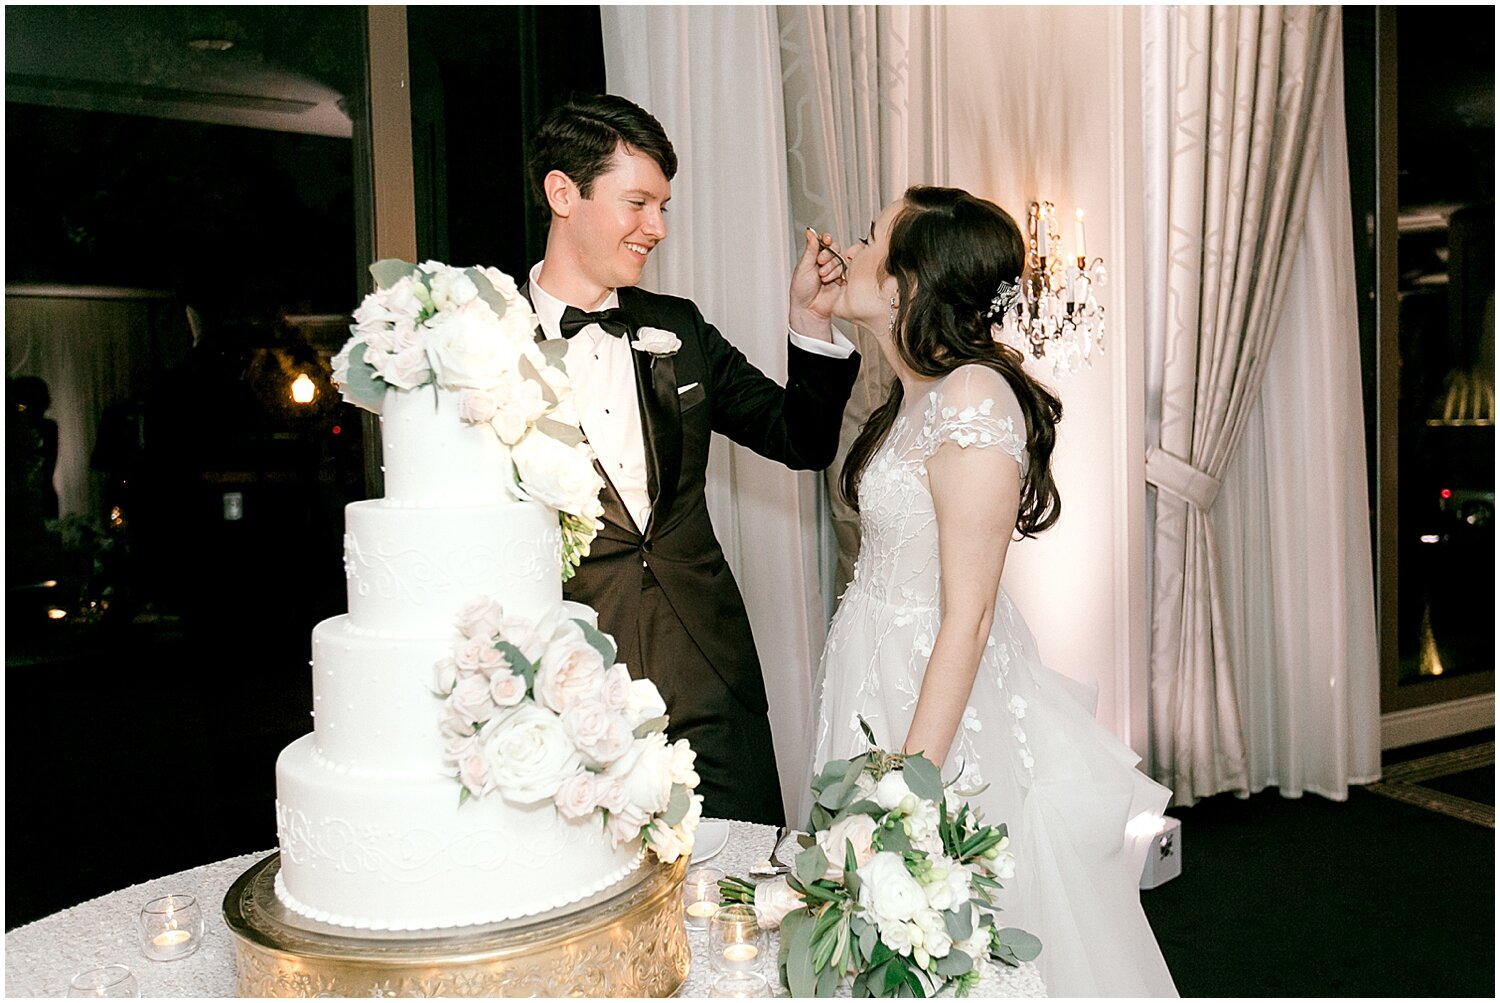  bride and groom cutting their wedding cake 